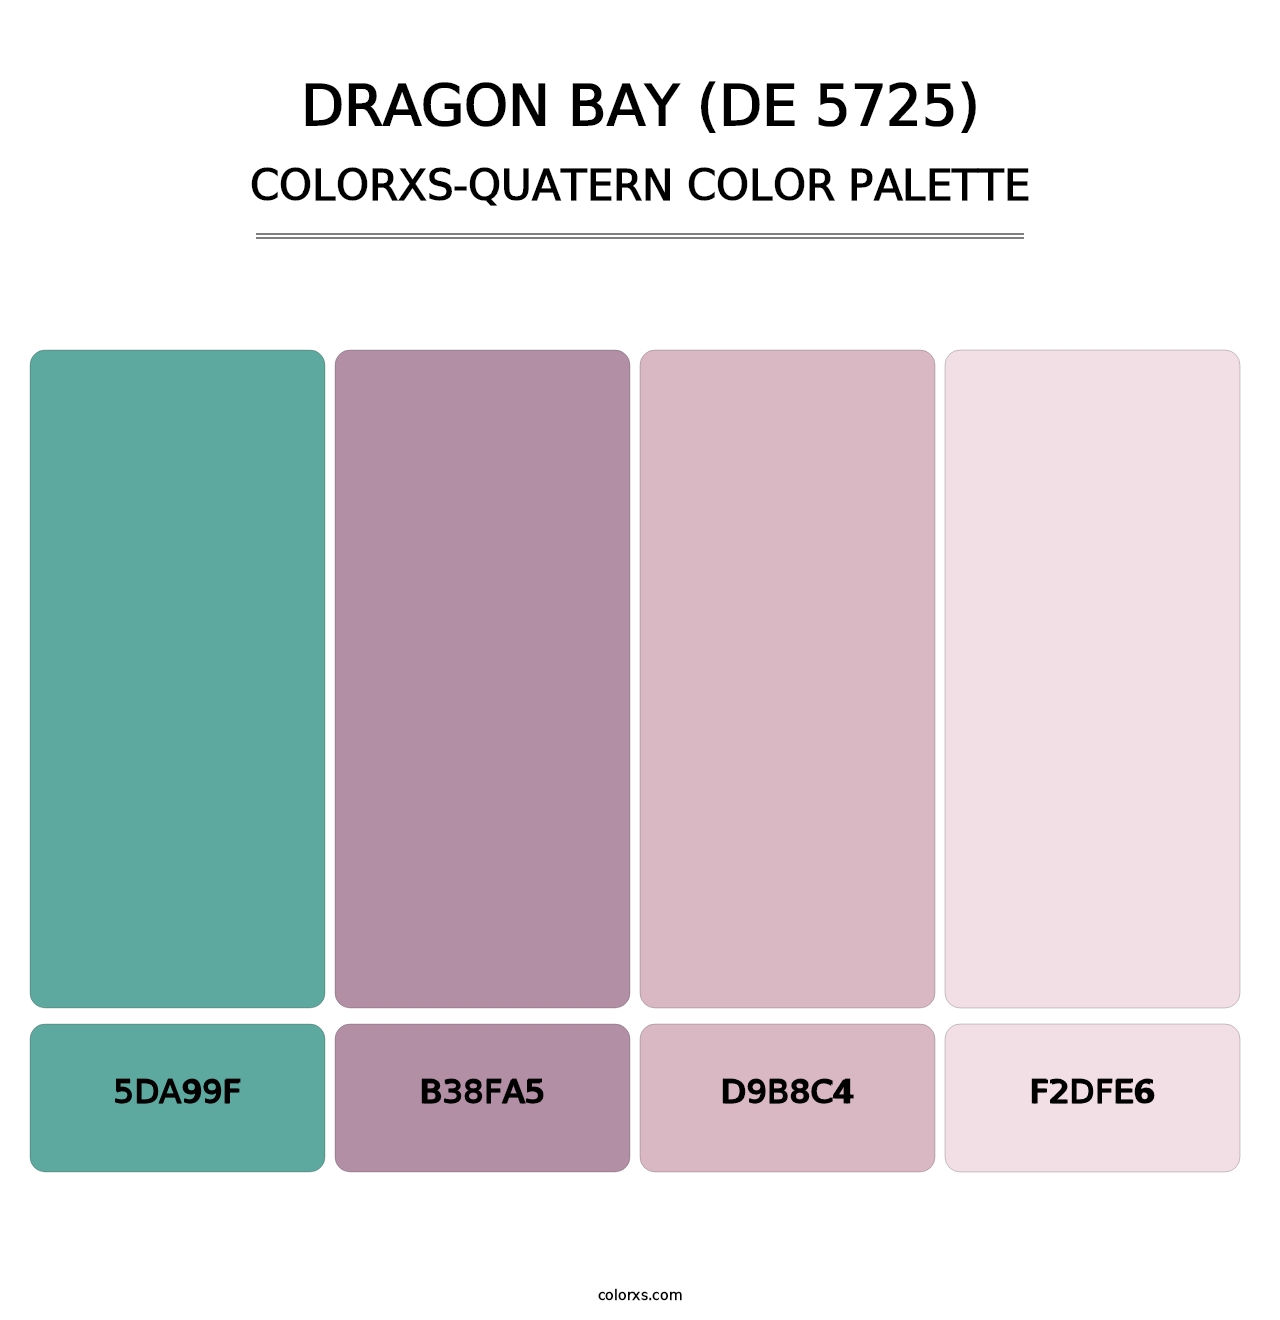 Dragon Bay (DE 5725) - Colorxs Quatern Palette